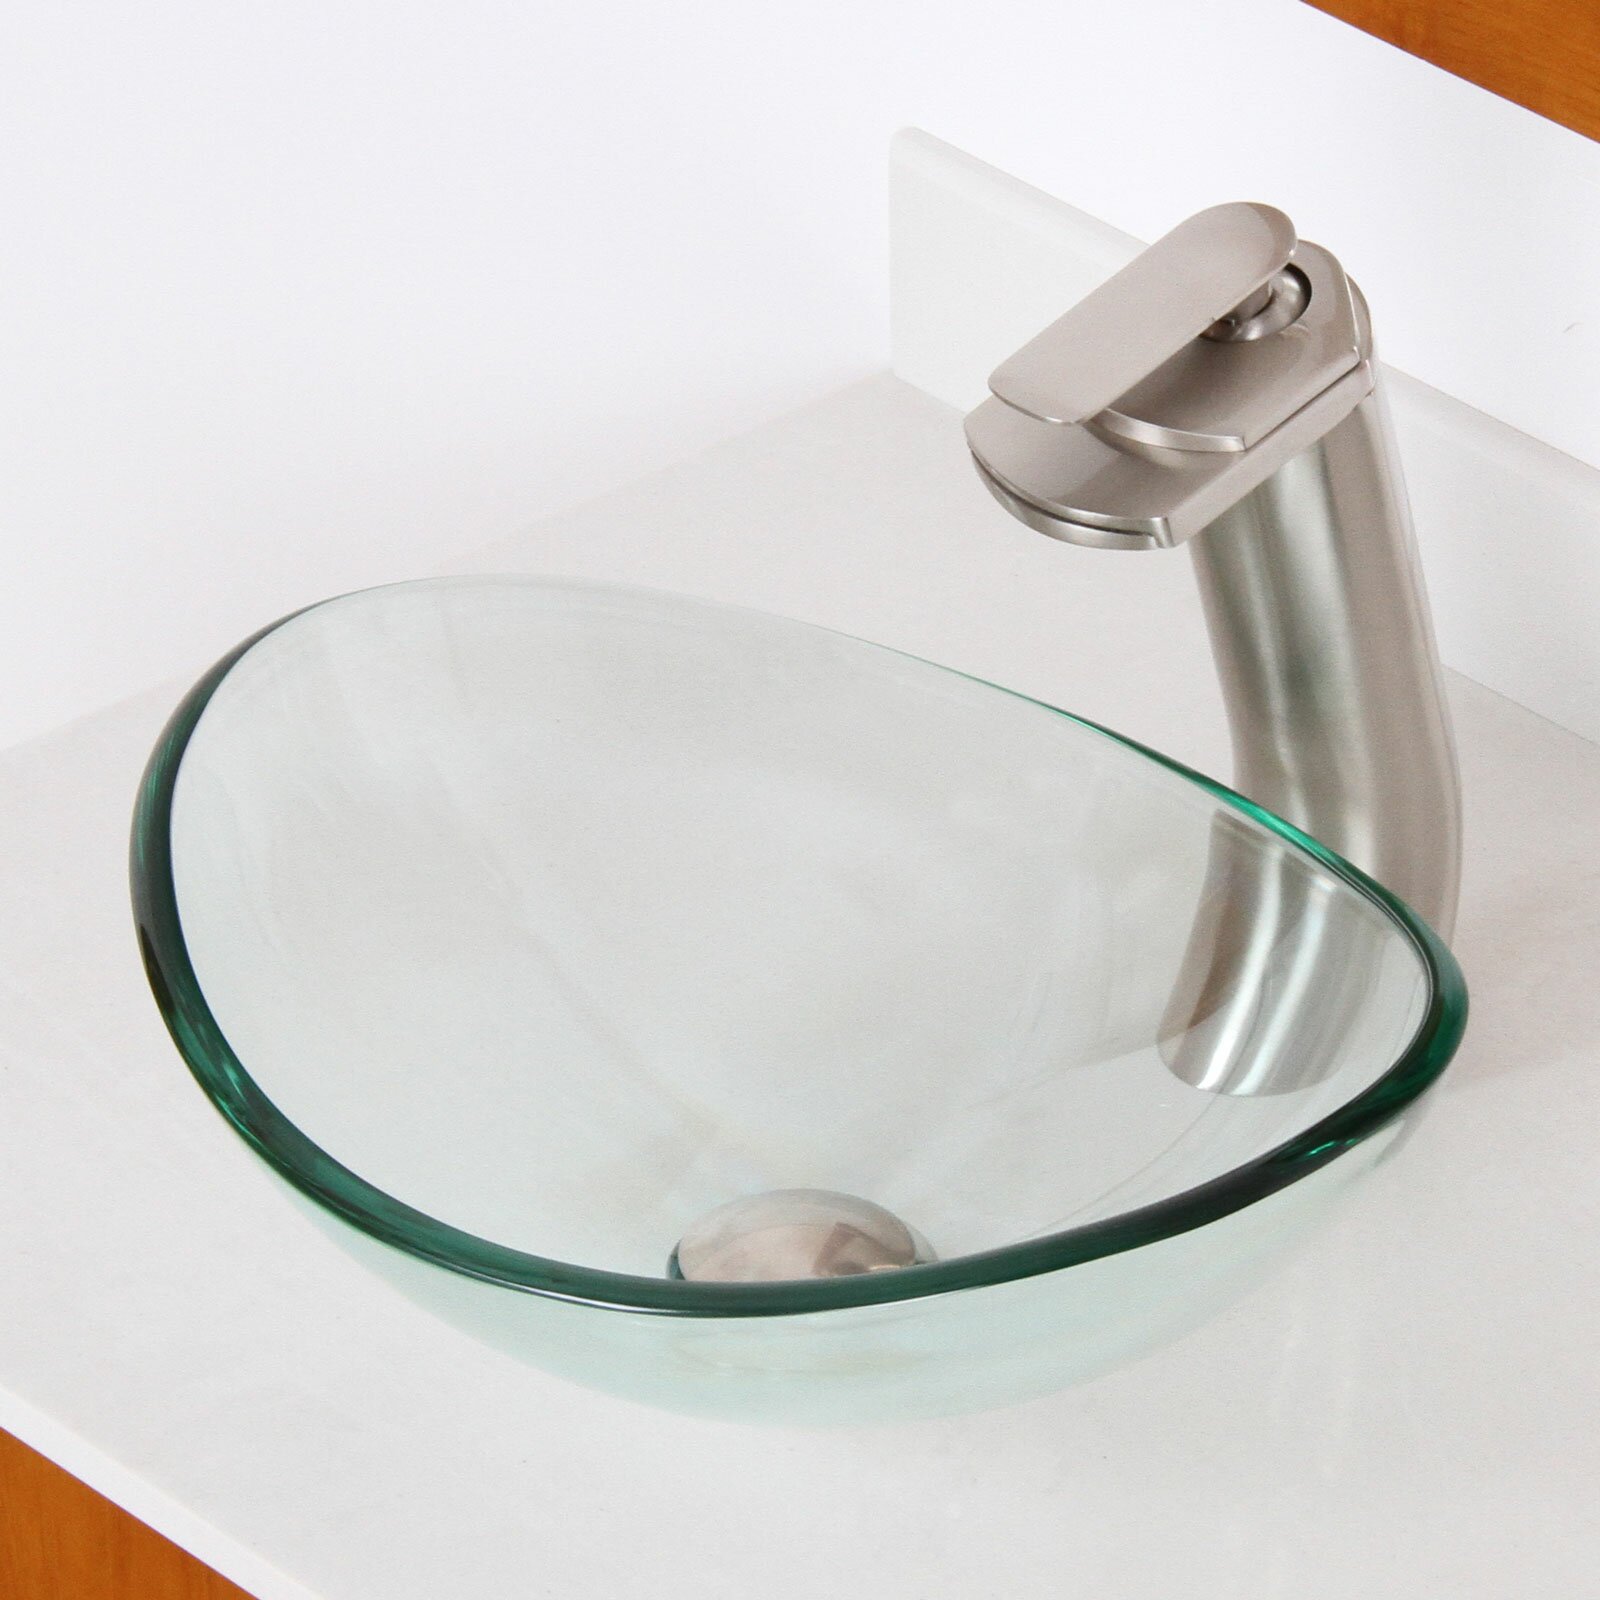 Drop In Bathroom Sinks Oval Image Gallery Motorhome Small Drop